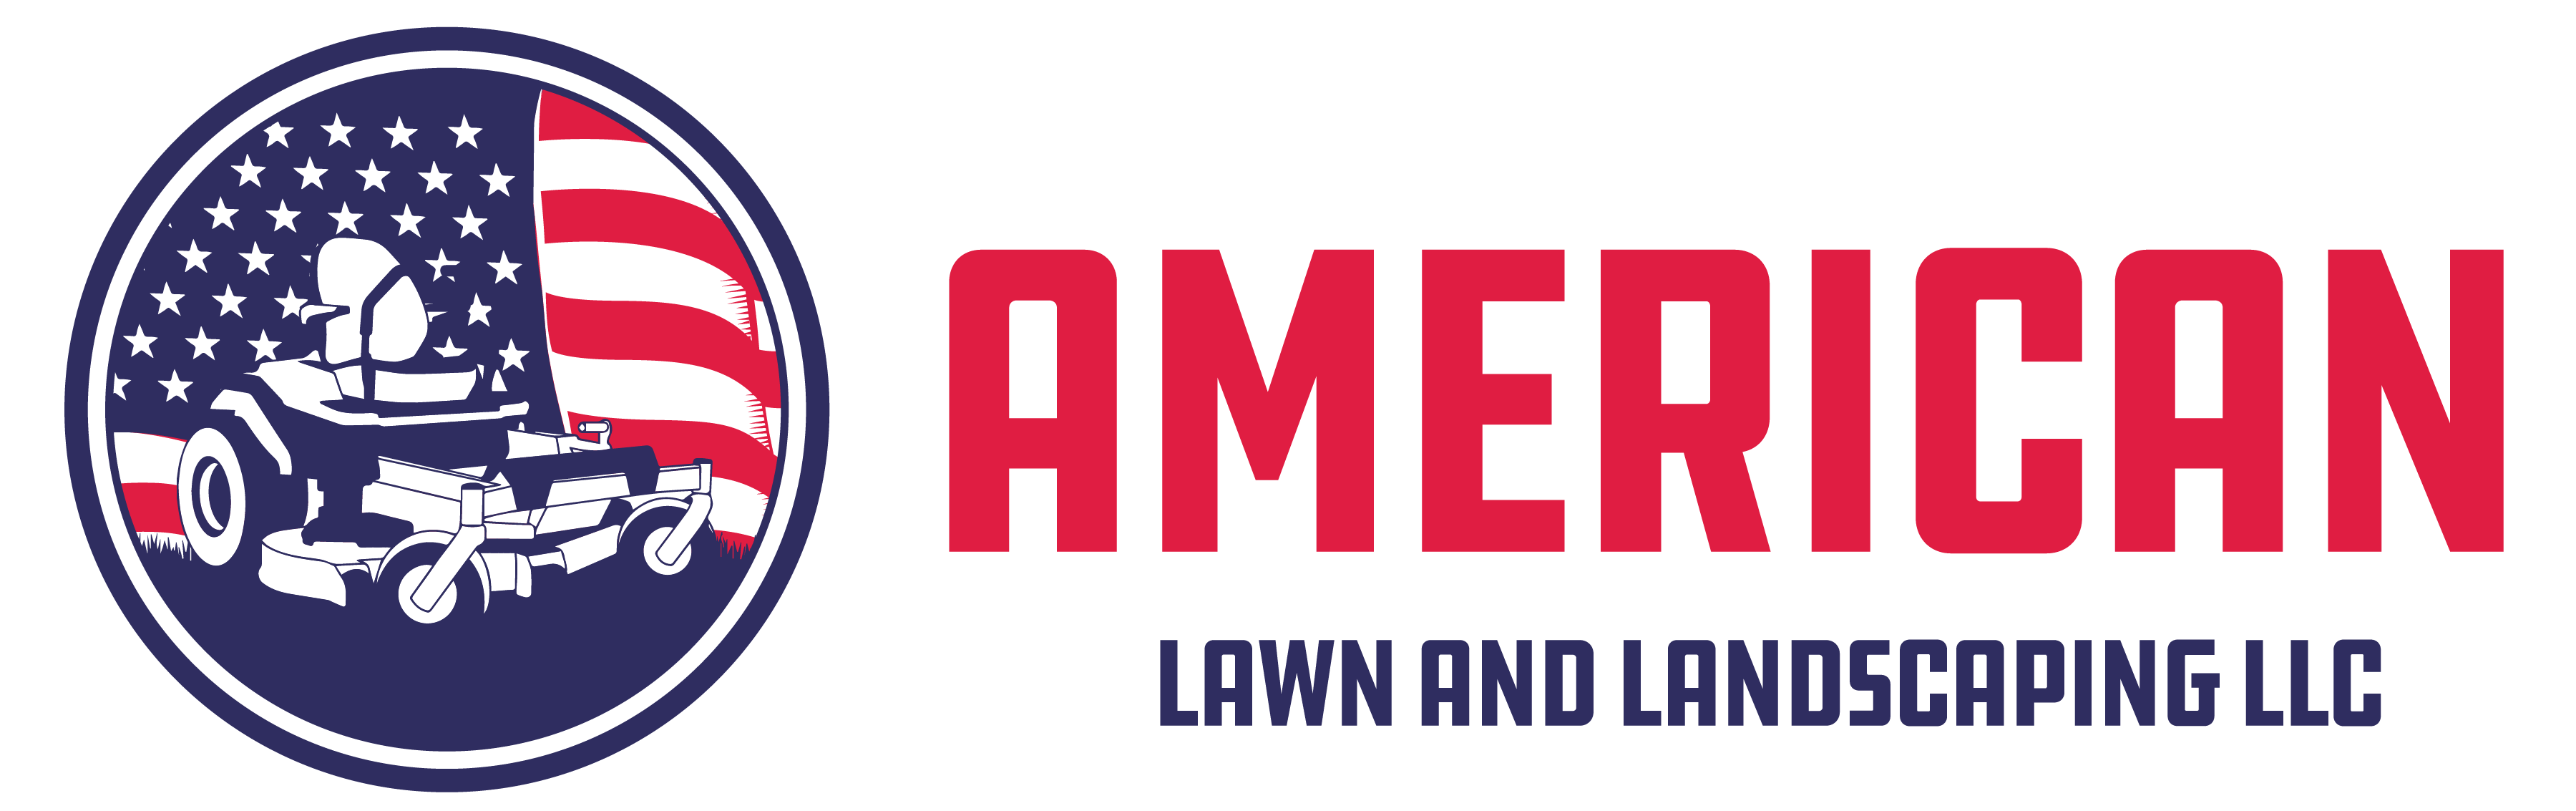 AmericanLandscaping-Logo-04.png